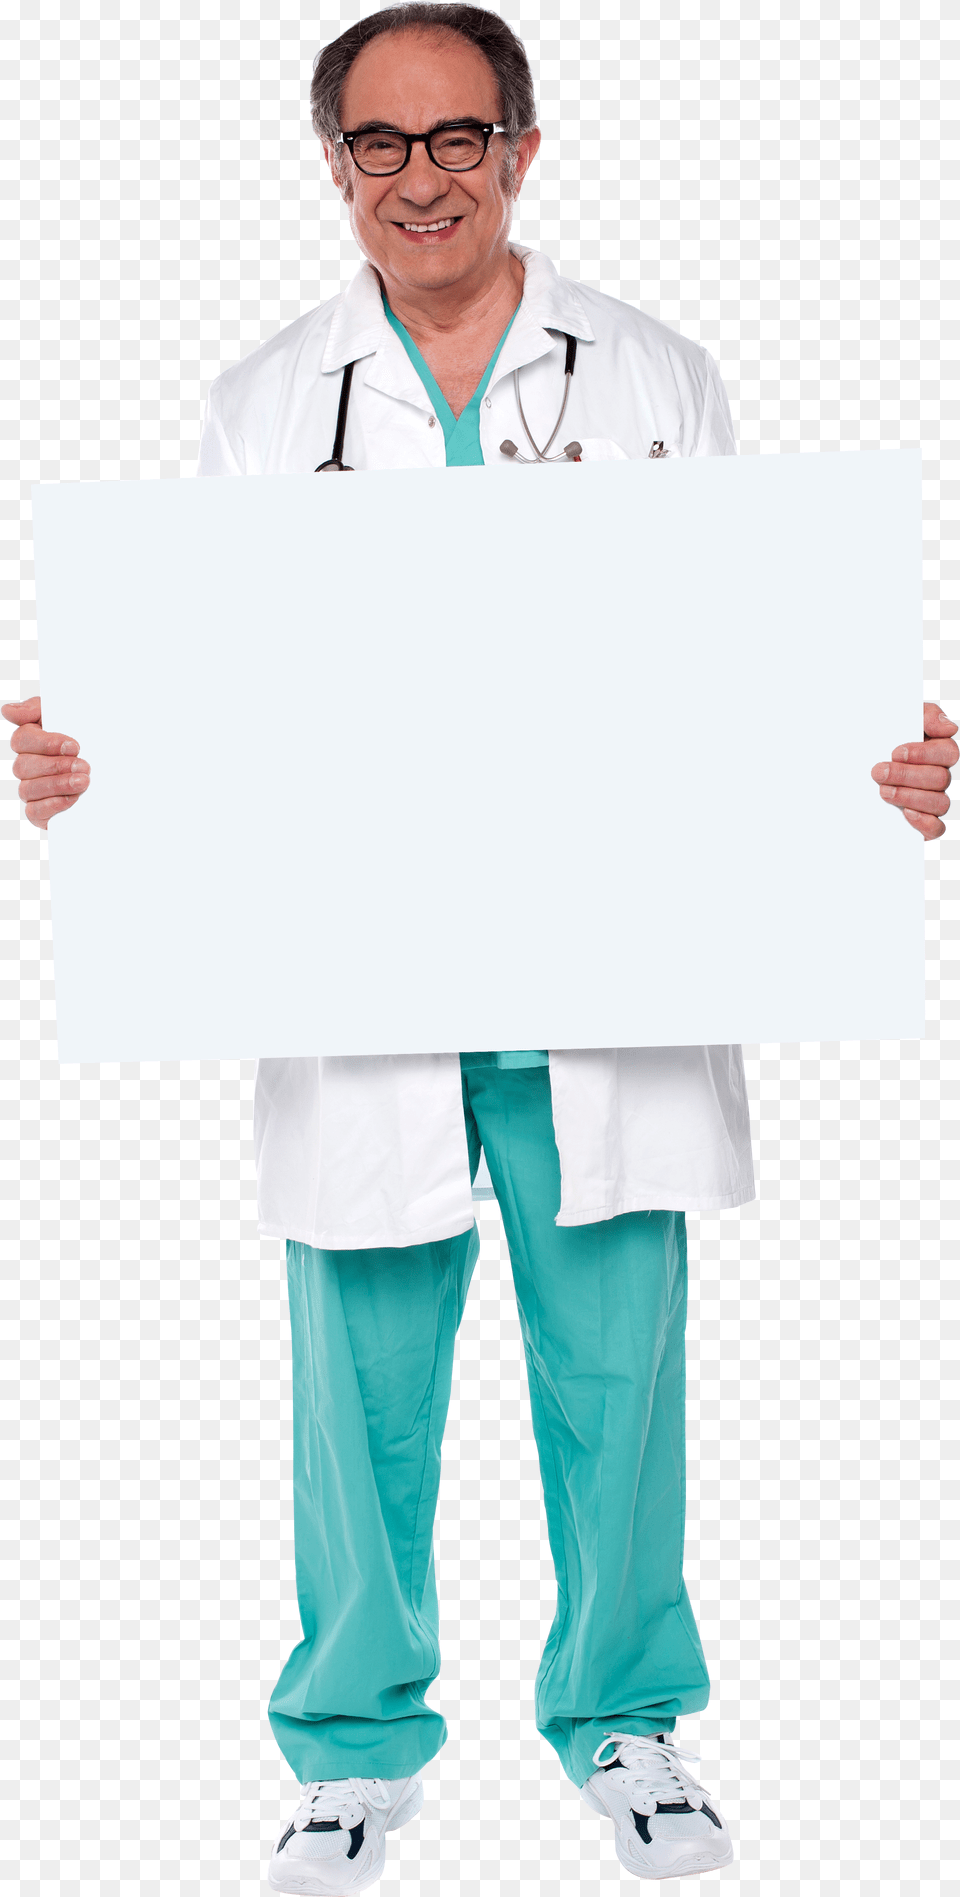 Doctor Holding Banner Image Doctor Holding Banner, Clothing, Coat, Lab Coat, Adult Png